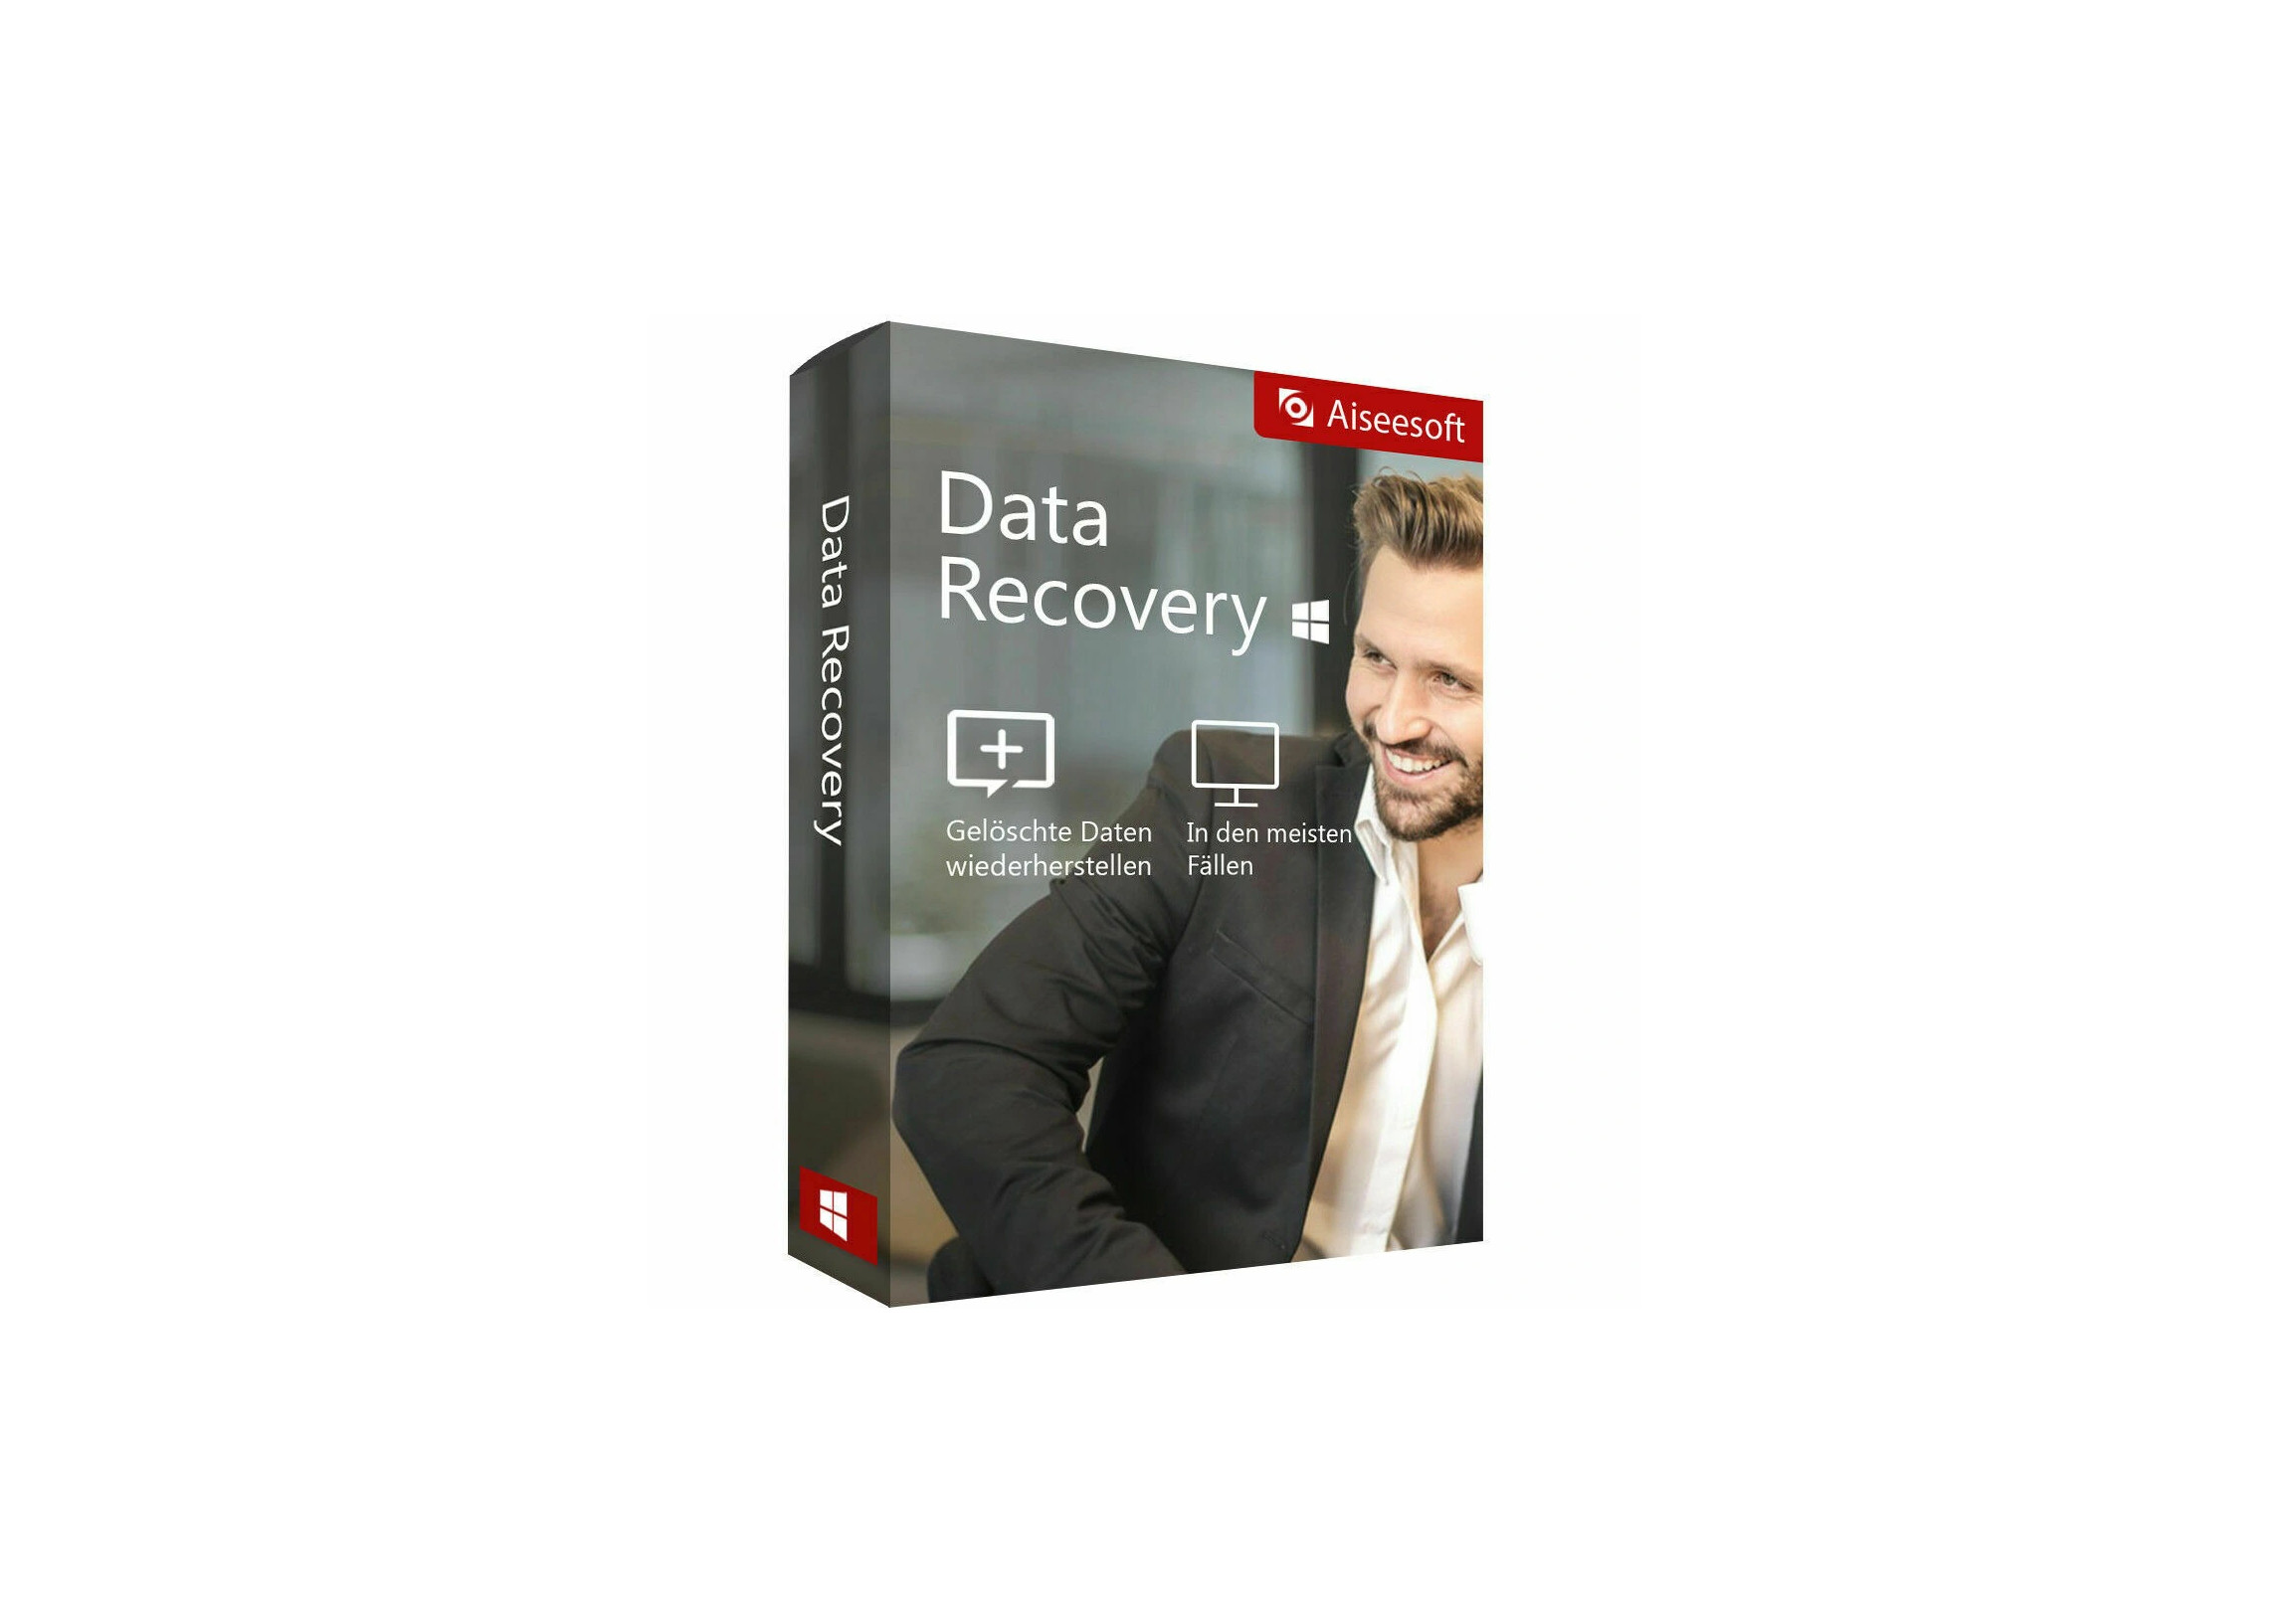 Aiseesoft Data Recovery Key (1 Year / 1 PC), 2.25$